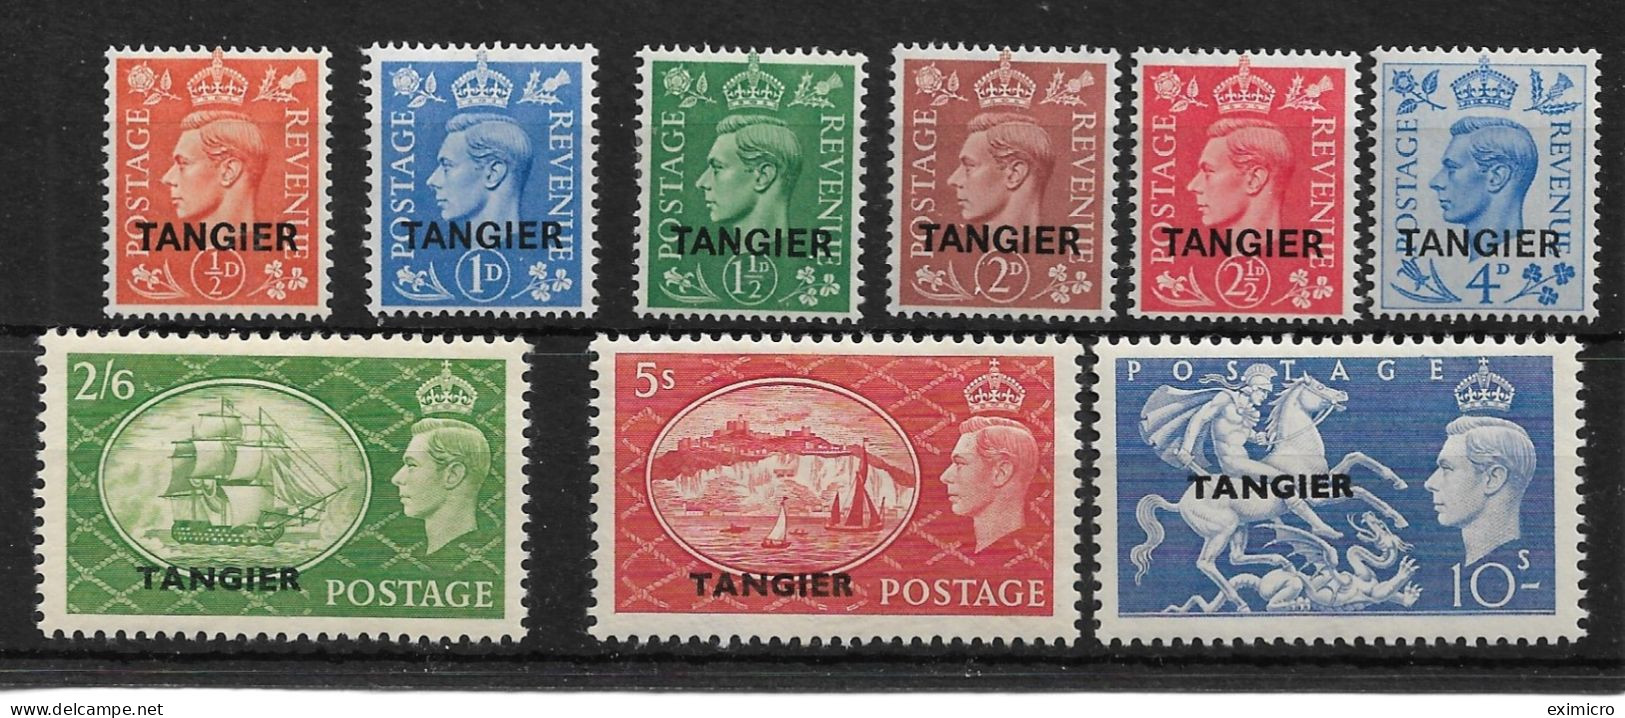 MOROCCO AGENCIES (TANGIER) 1950 - 1951 SET SG 280/288 LIGHTLY MOUNTED MINT Cat £70 - Morocco Agencies / Tangier (...-1958)